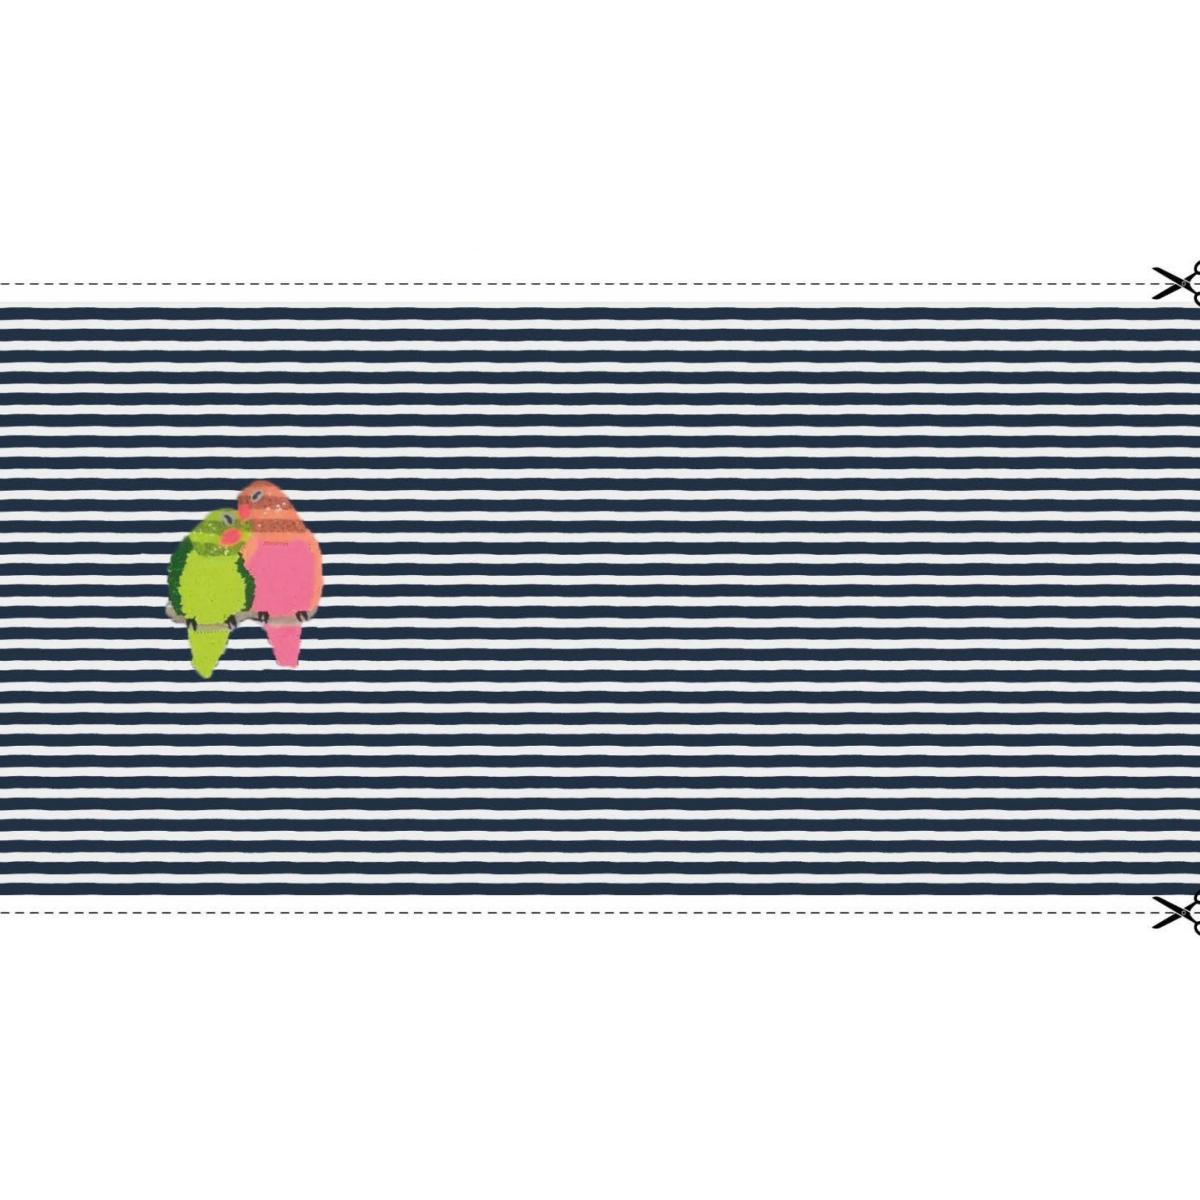 Q2061-031-panneau-jersey-marine-et-blanc-motif-perroquet-en-sequin-zoom